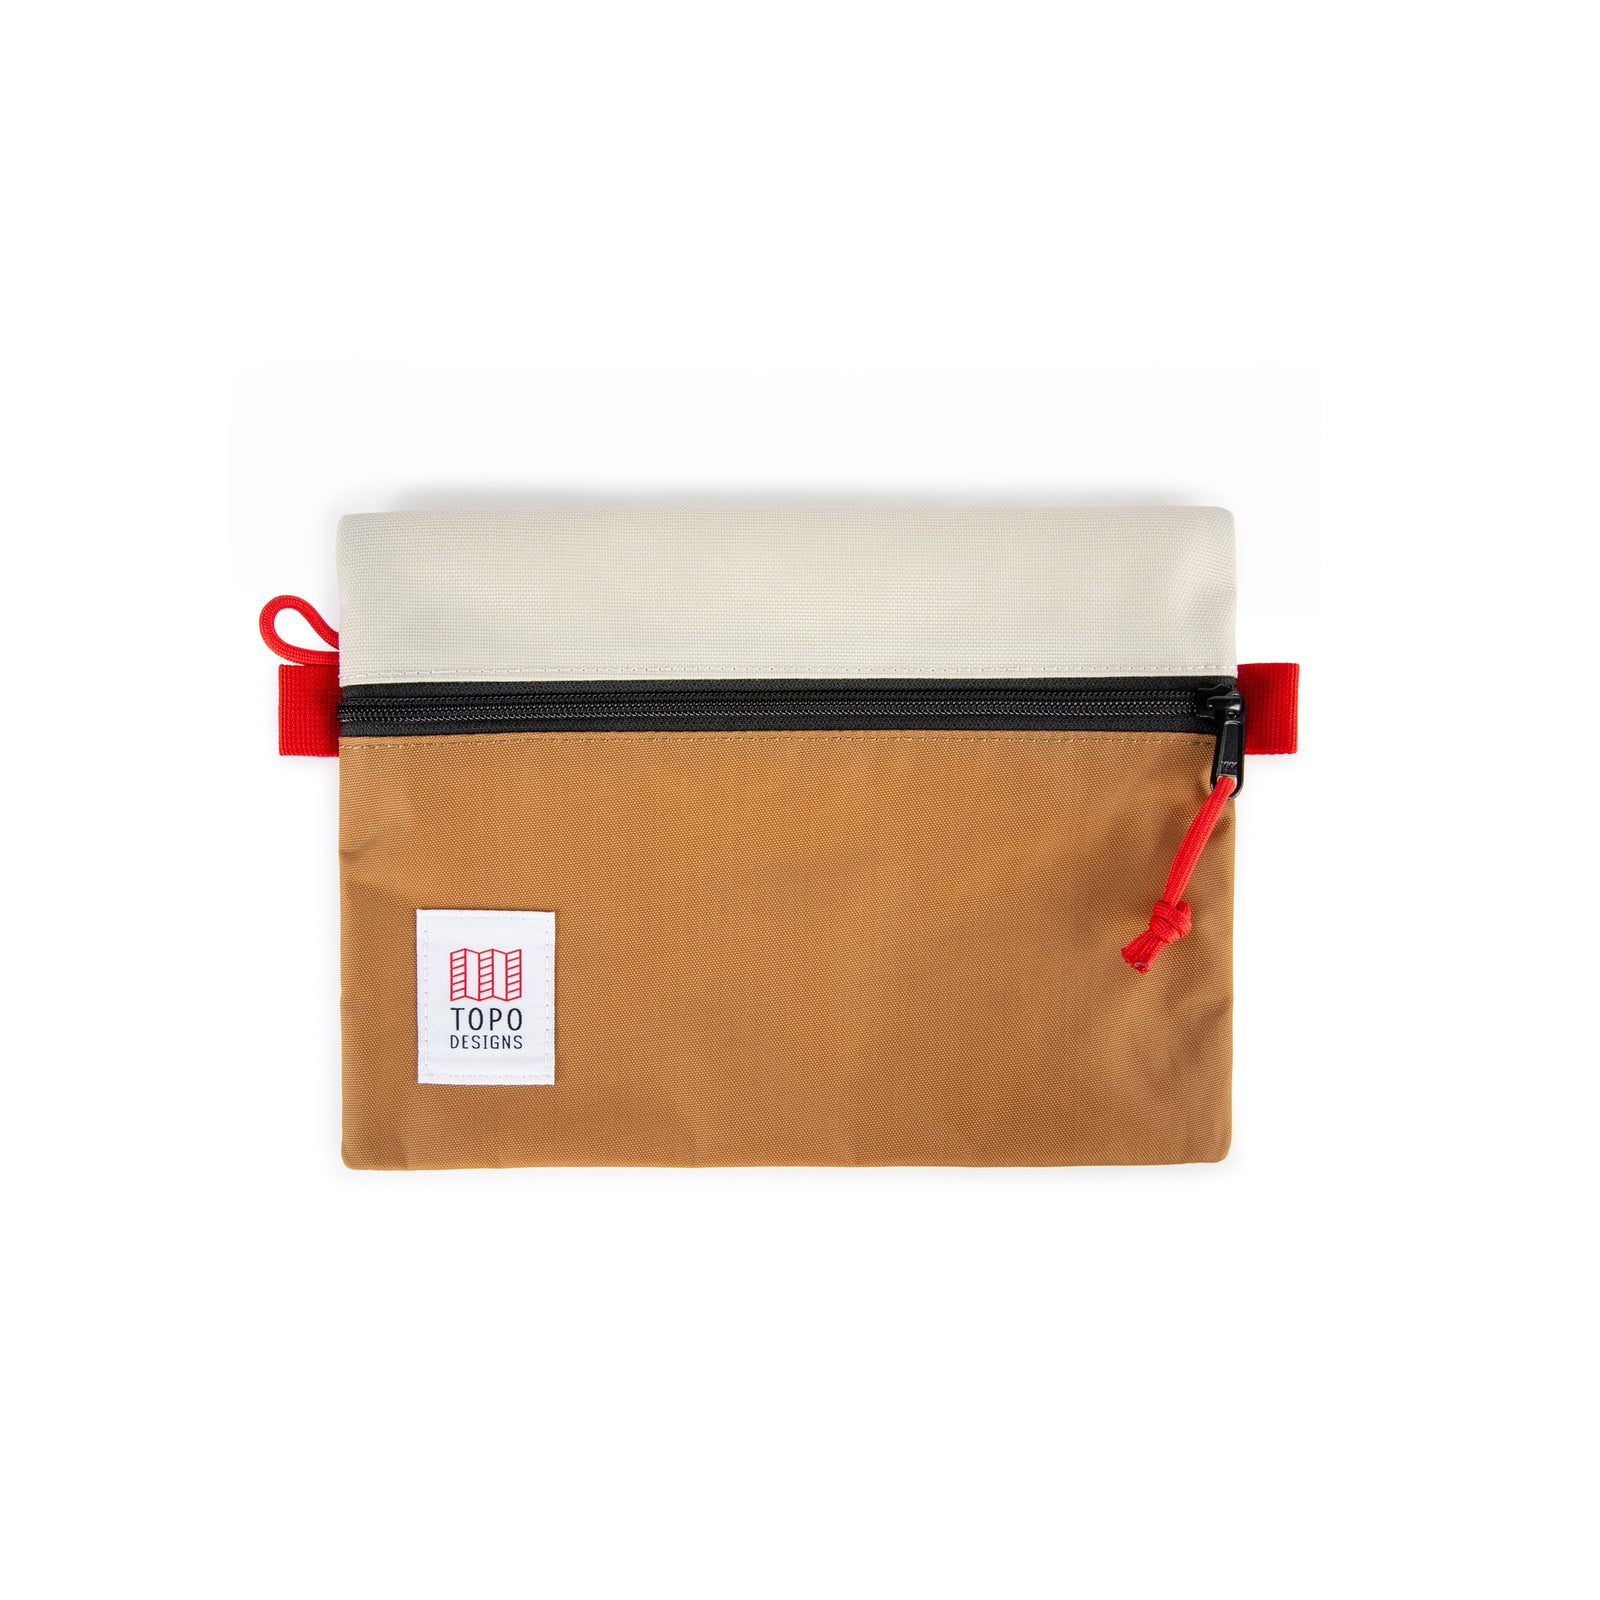 Topo Designs Accessory Bags in "Medium" "Bone White / Khaki - Recycled" brown.